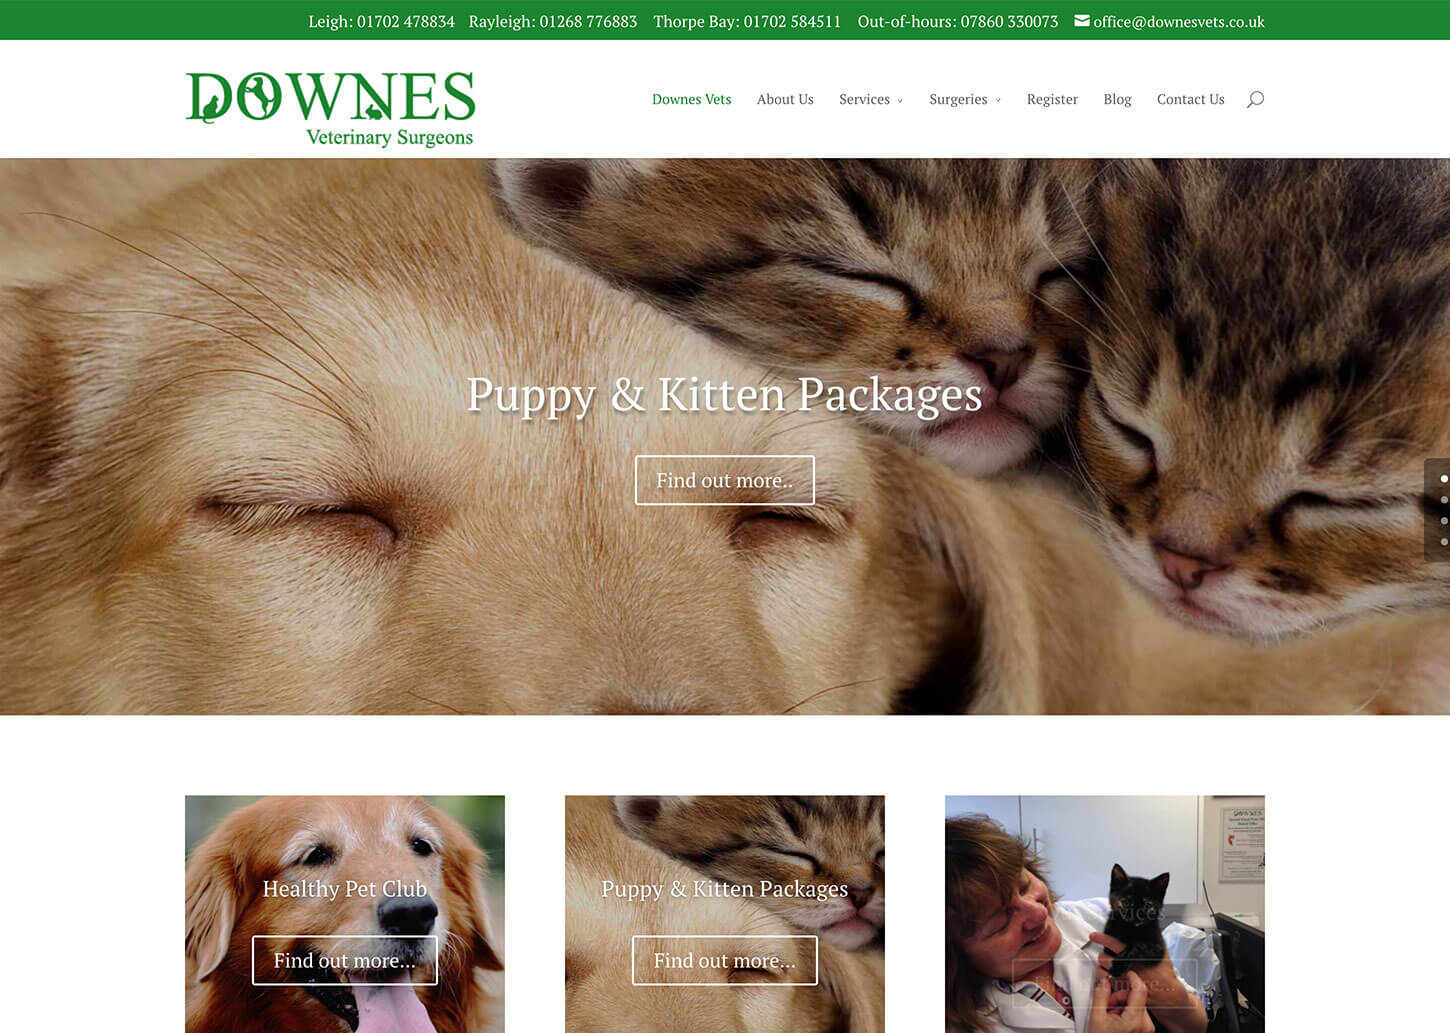 Vets website design for Downes Vets: Home page design